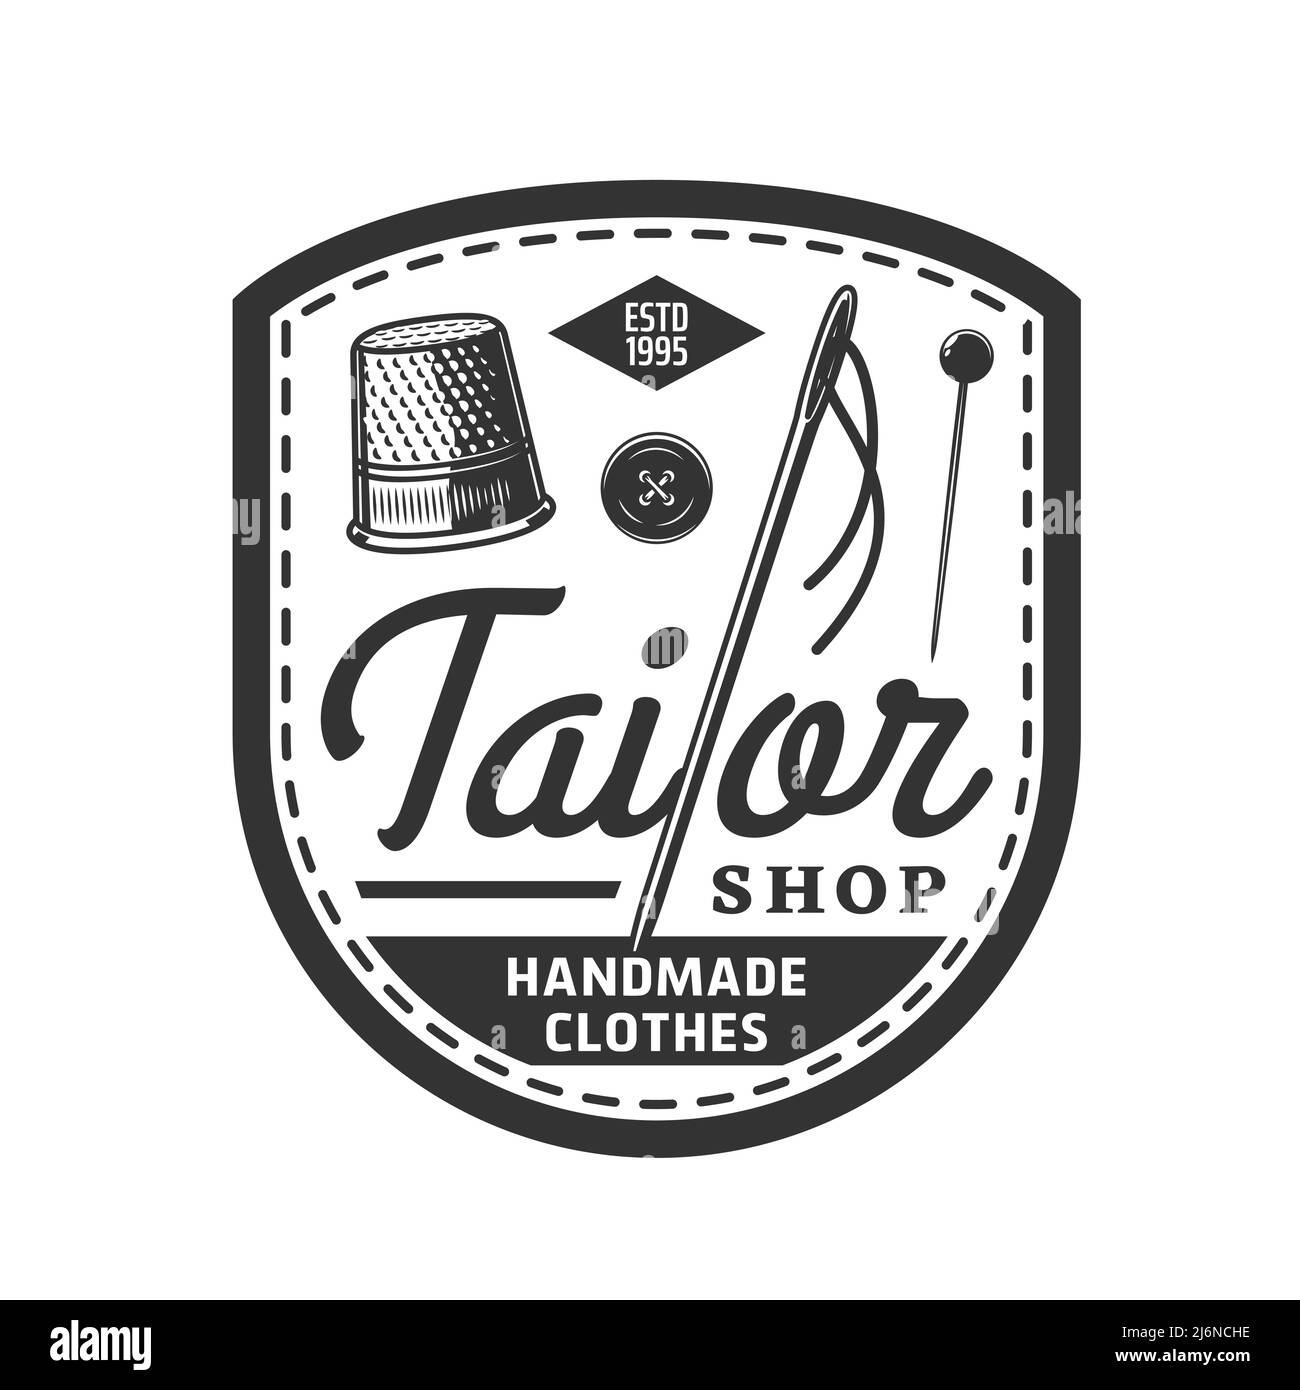 Tailor shop icon, vector vintage emblem for handmade clothes shop